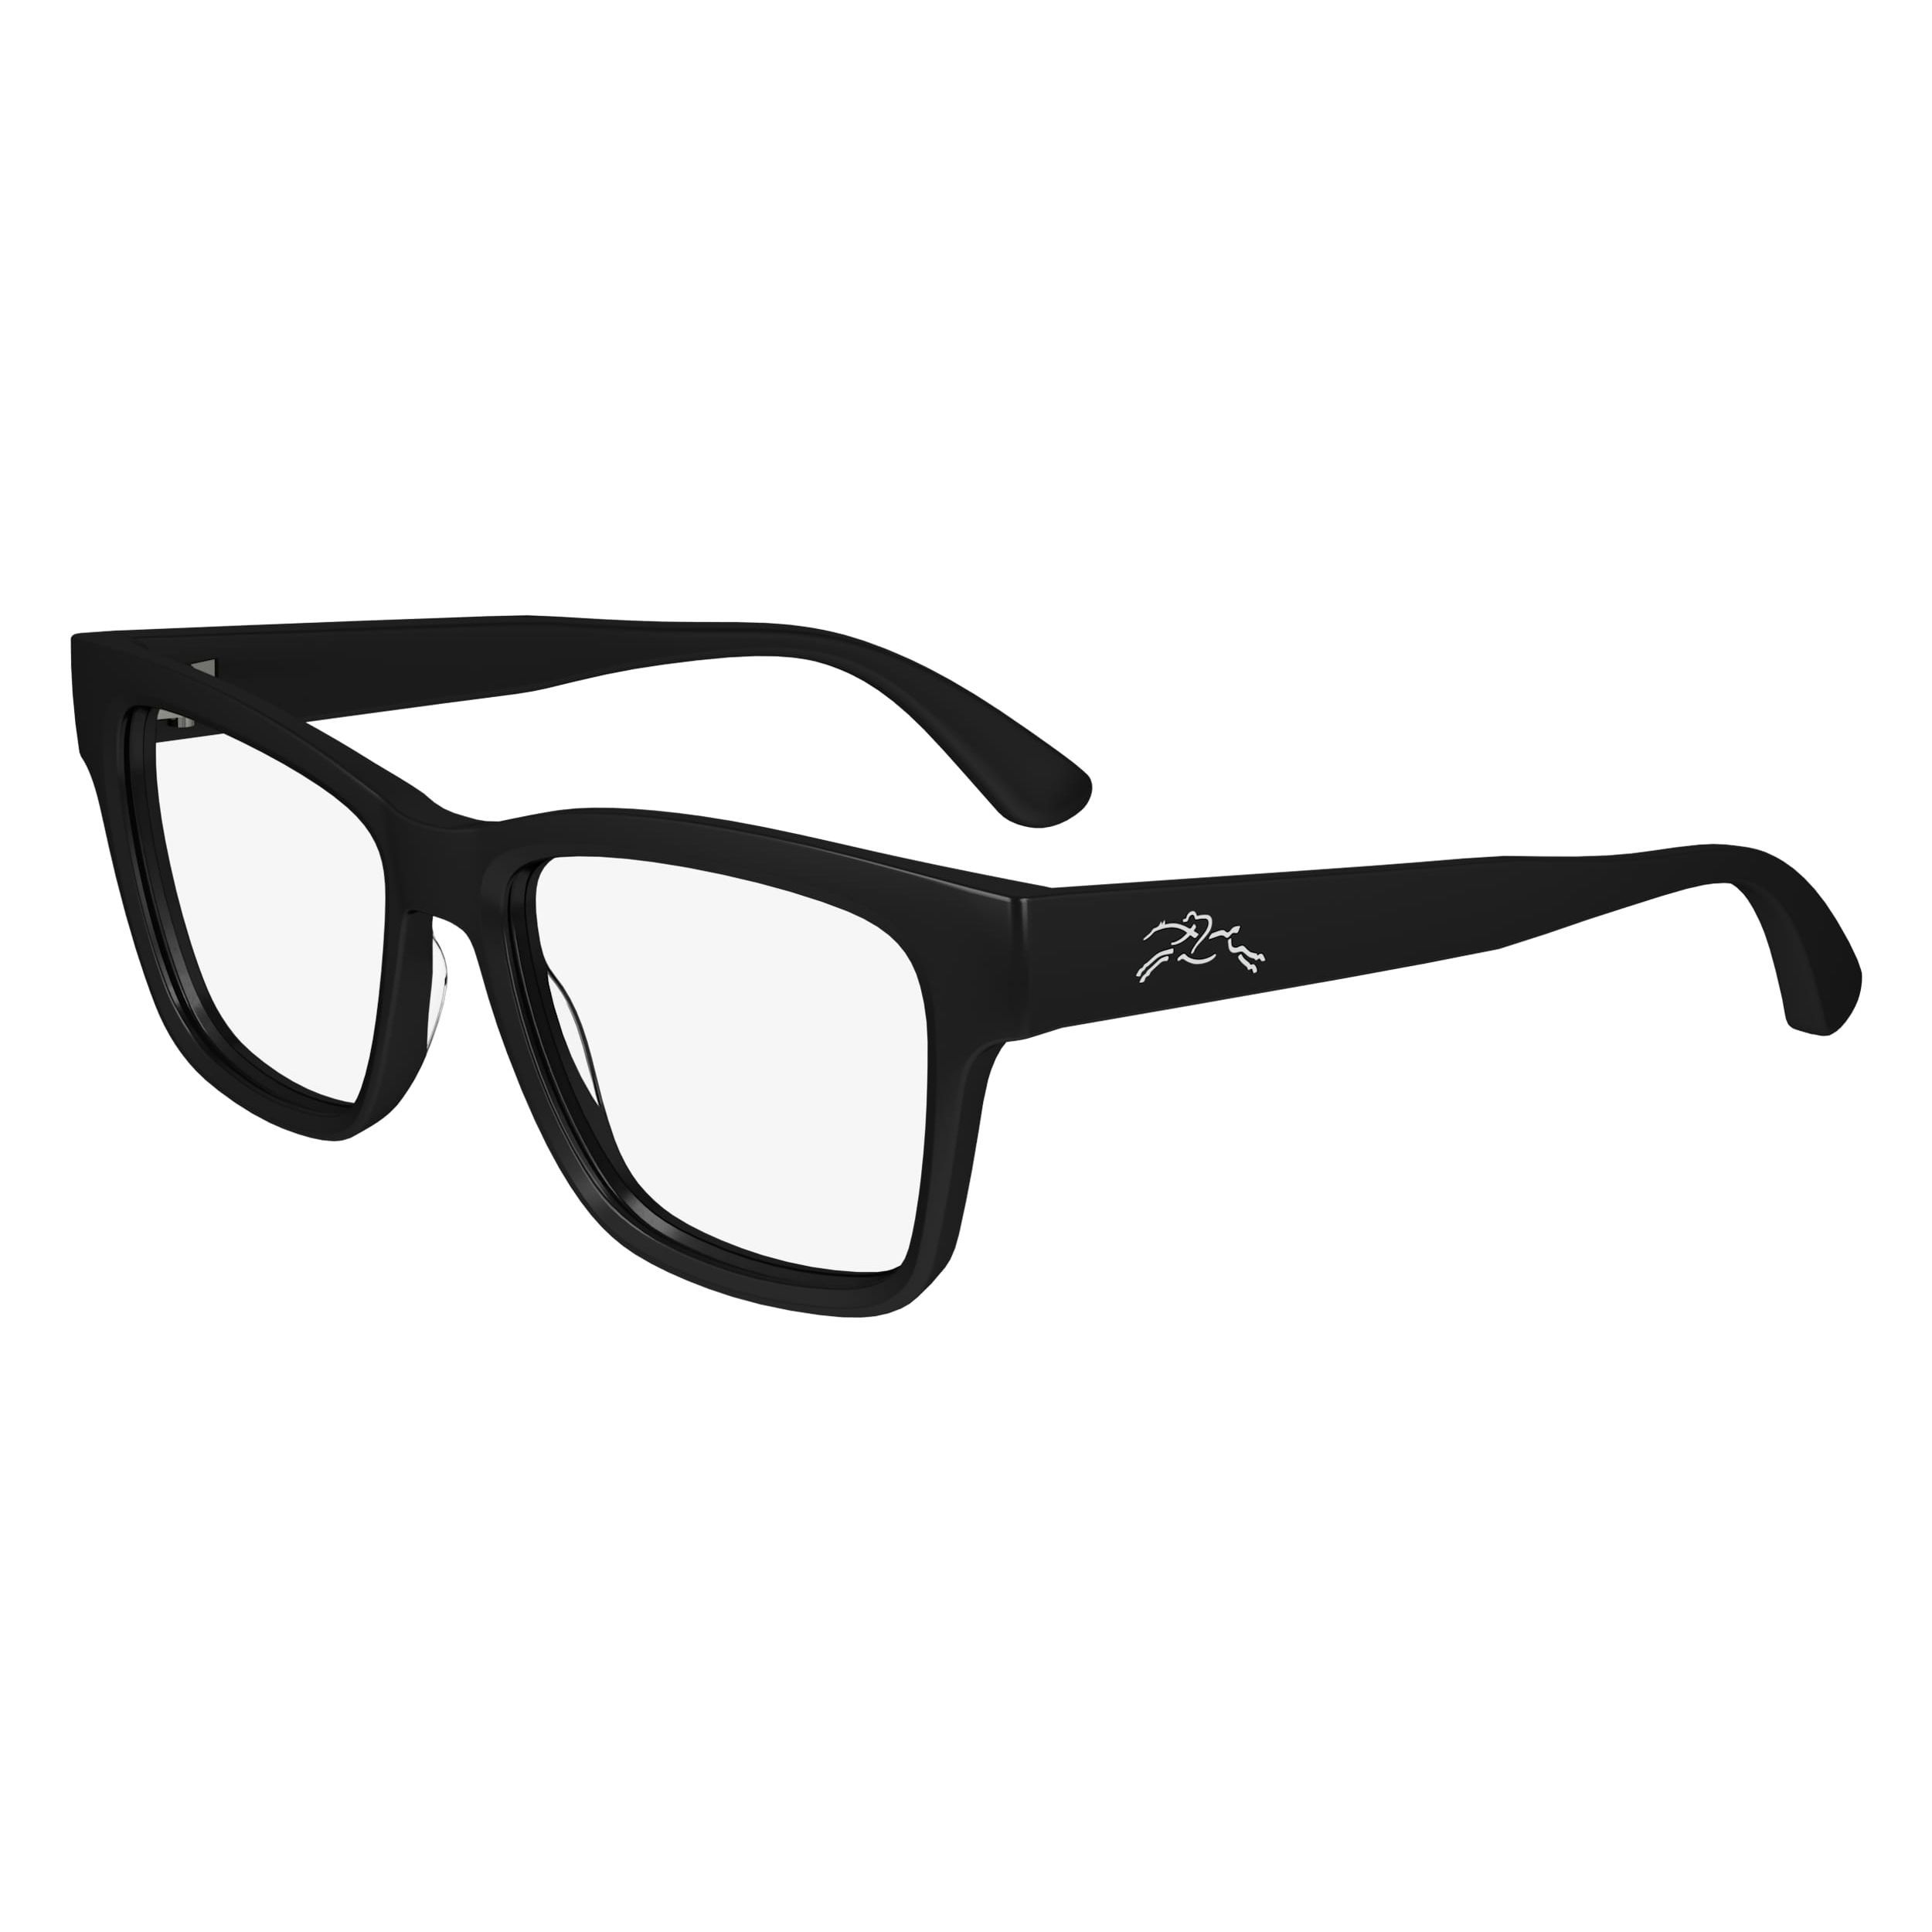 LO2737 Square Eyeglasses 001 - size 52